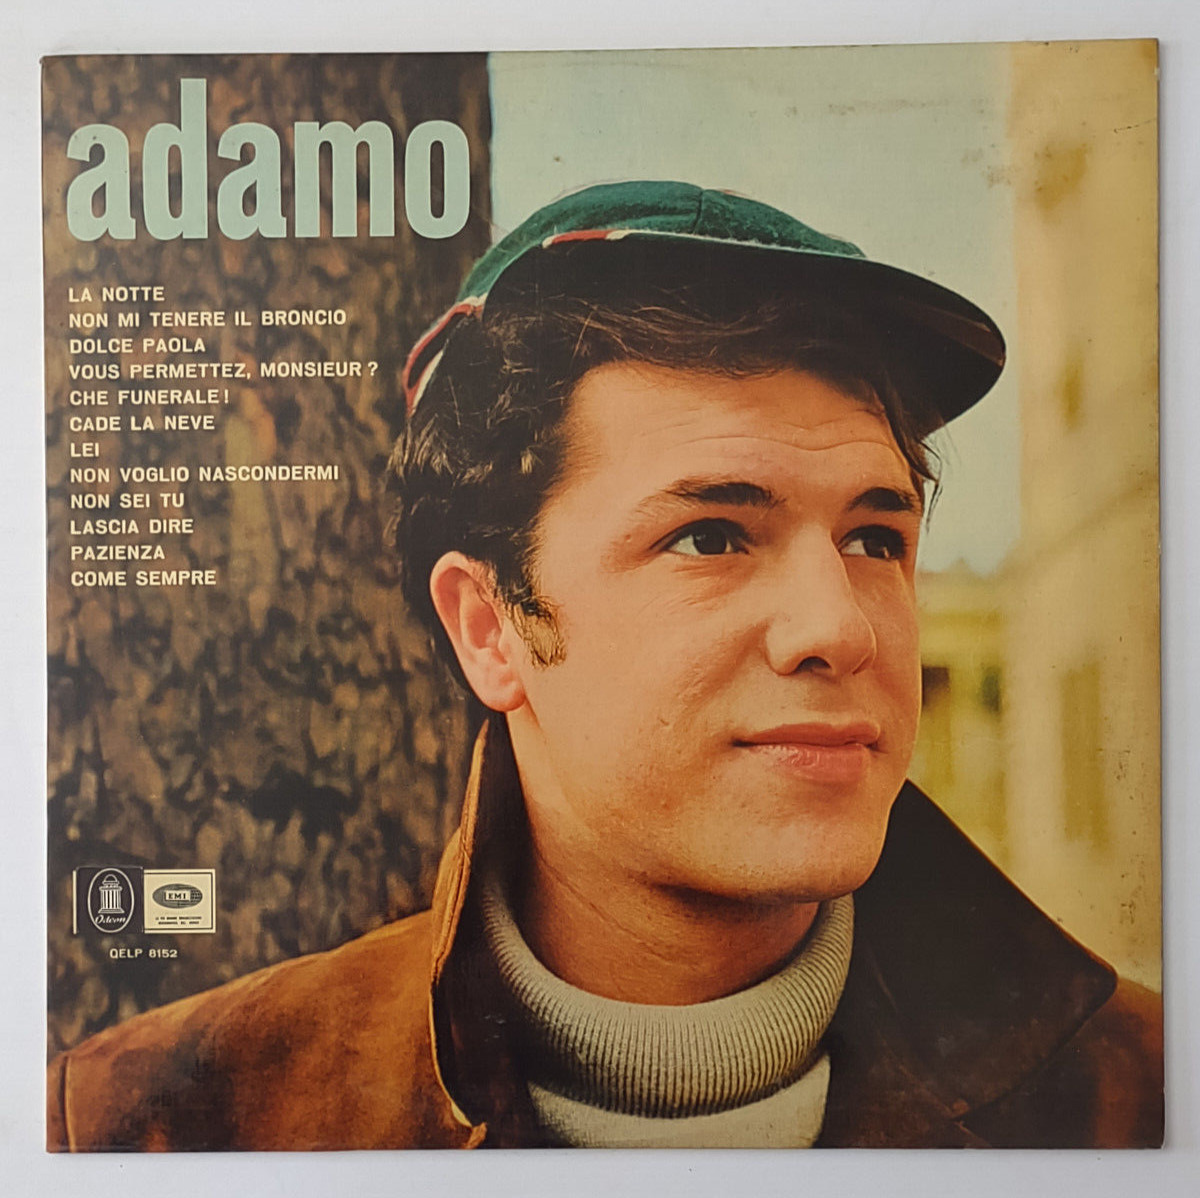 Adamo vinyl record Odeon QELP 8152 Tested Works